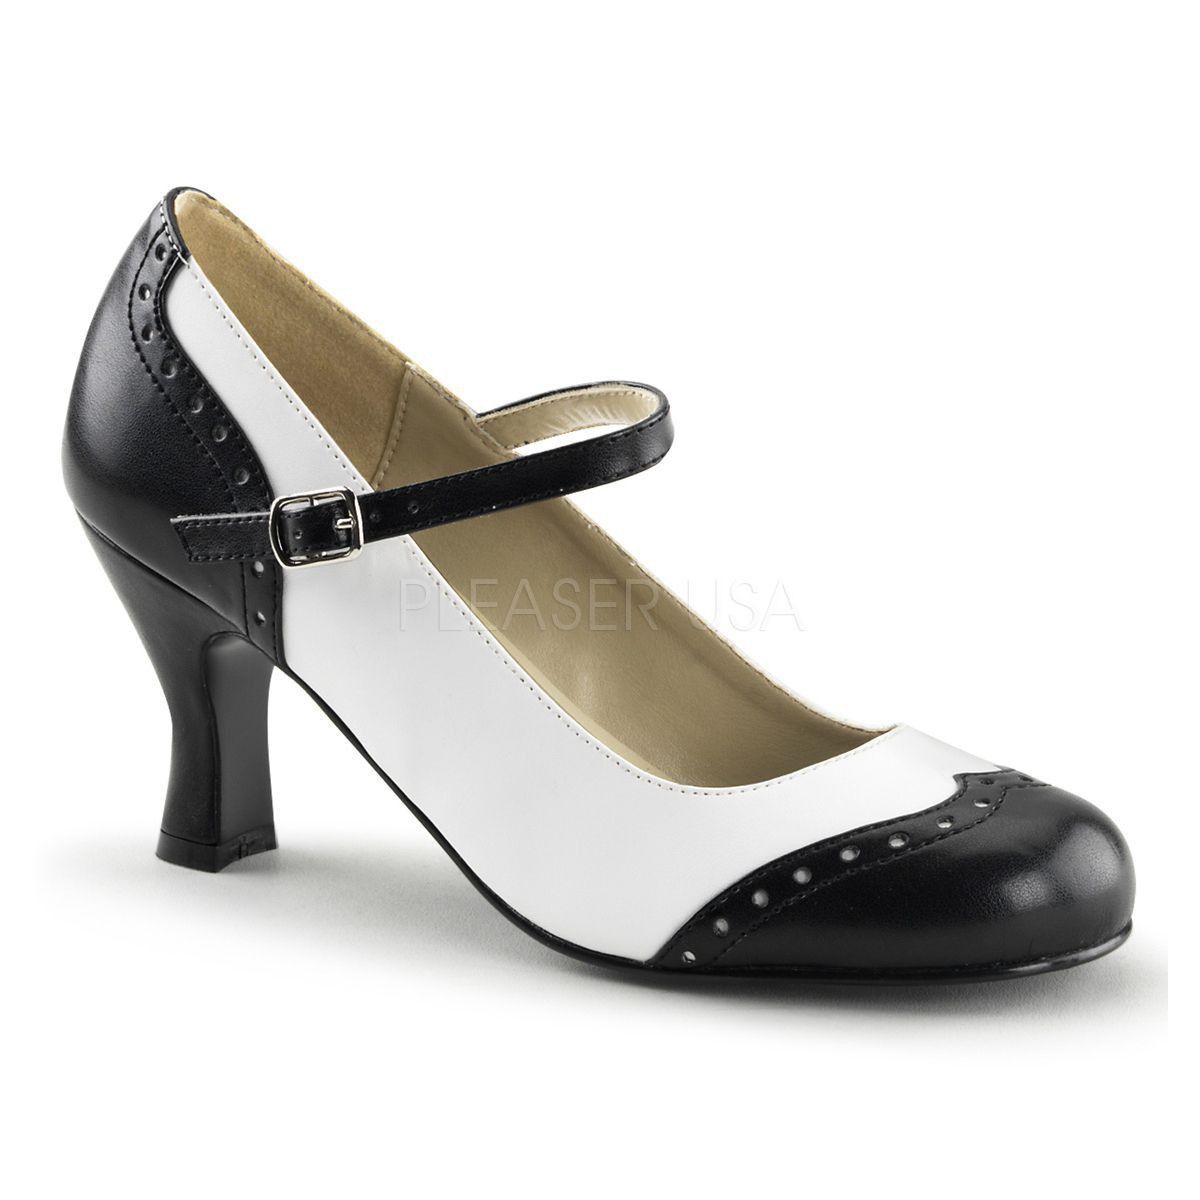 Zapatos de fantasía en dos tonos estilo clásico con correa - Moda Pin Up 50'S